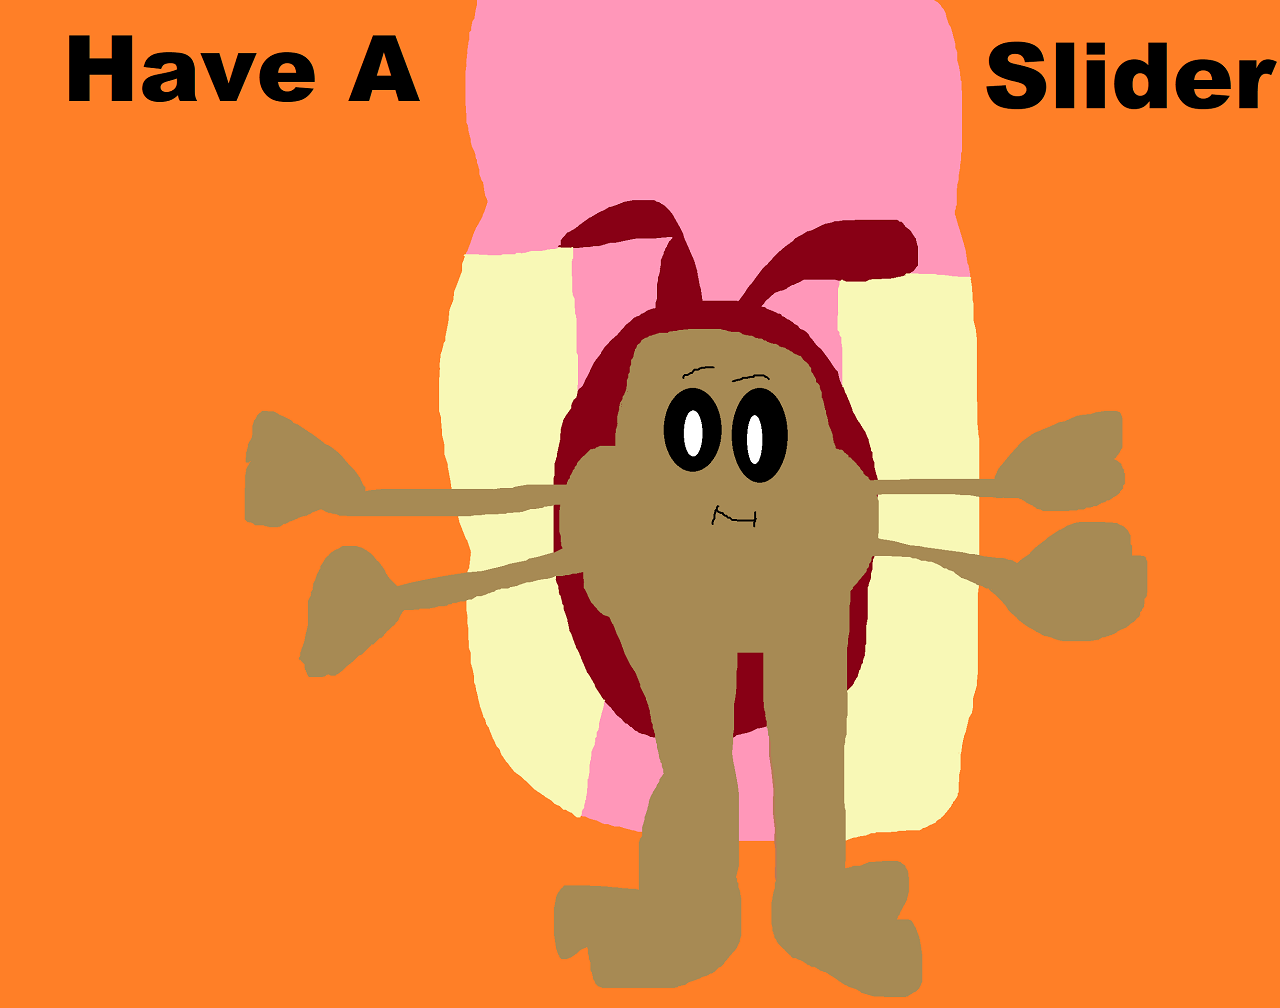 Have A Slider by Falconlobo